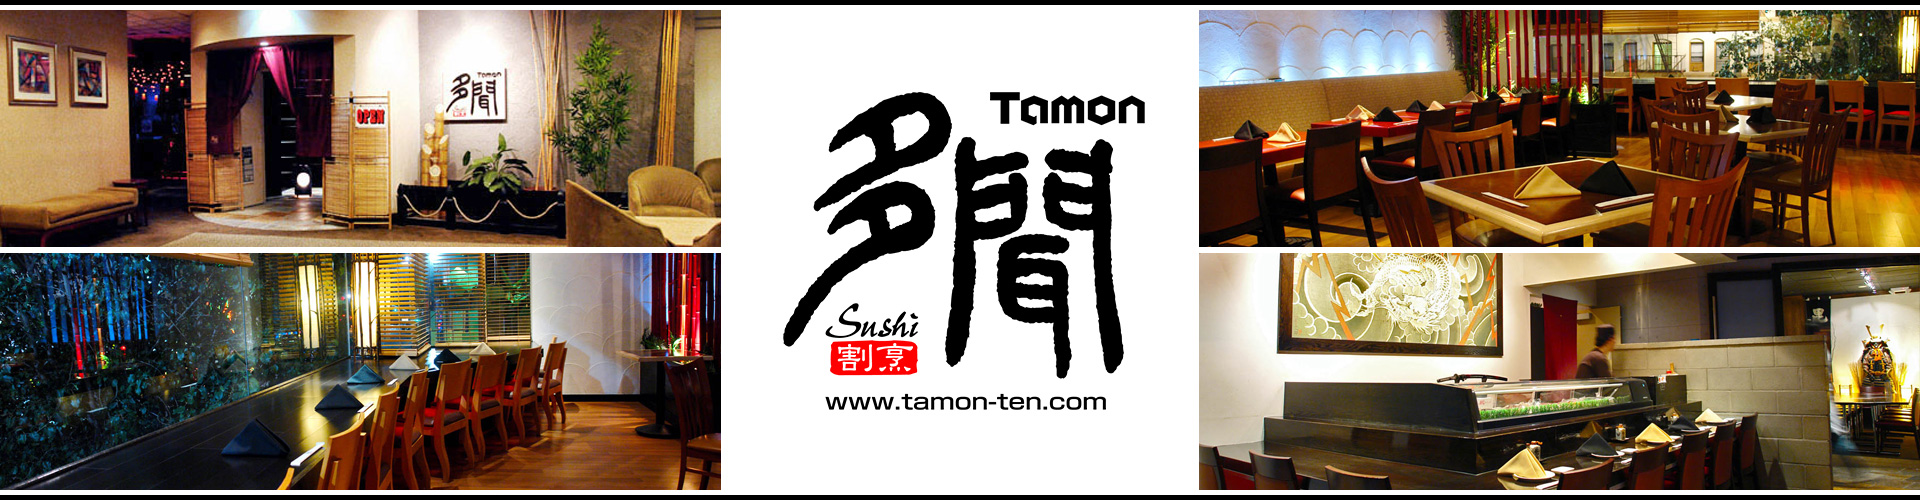 Sushi Tamon